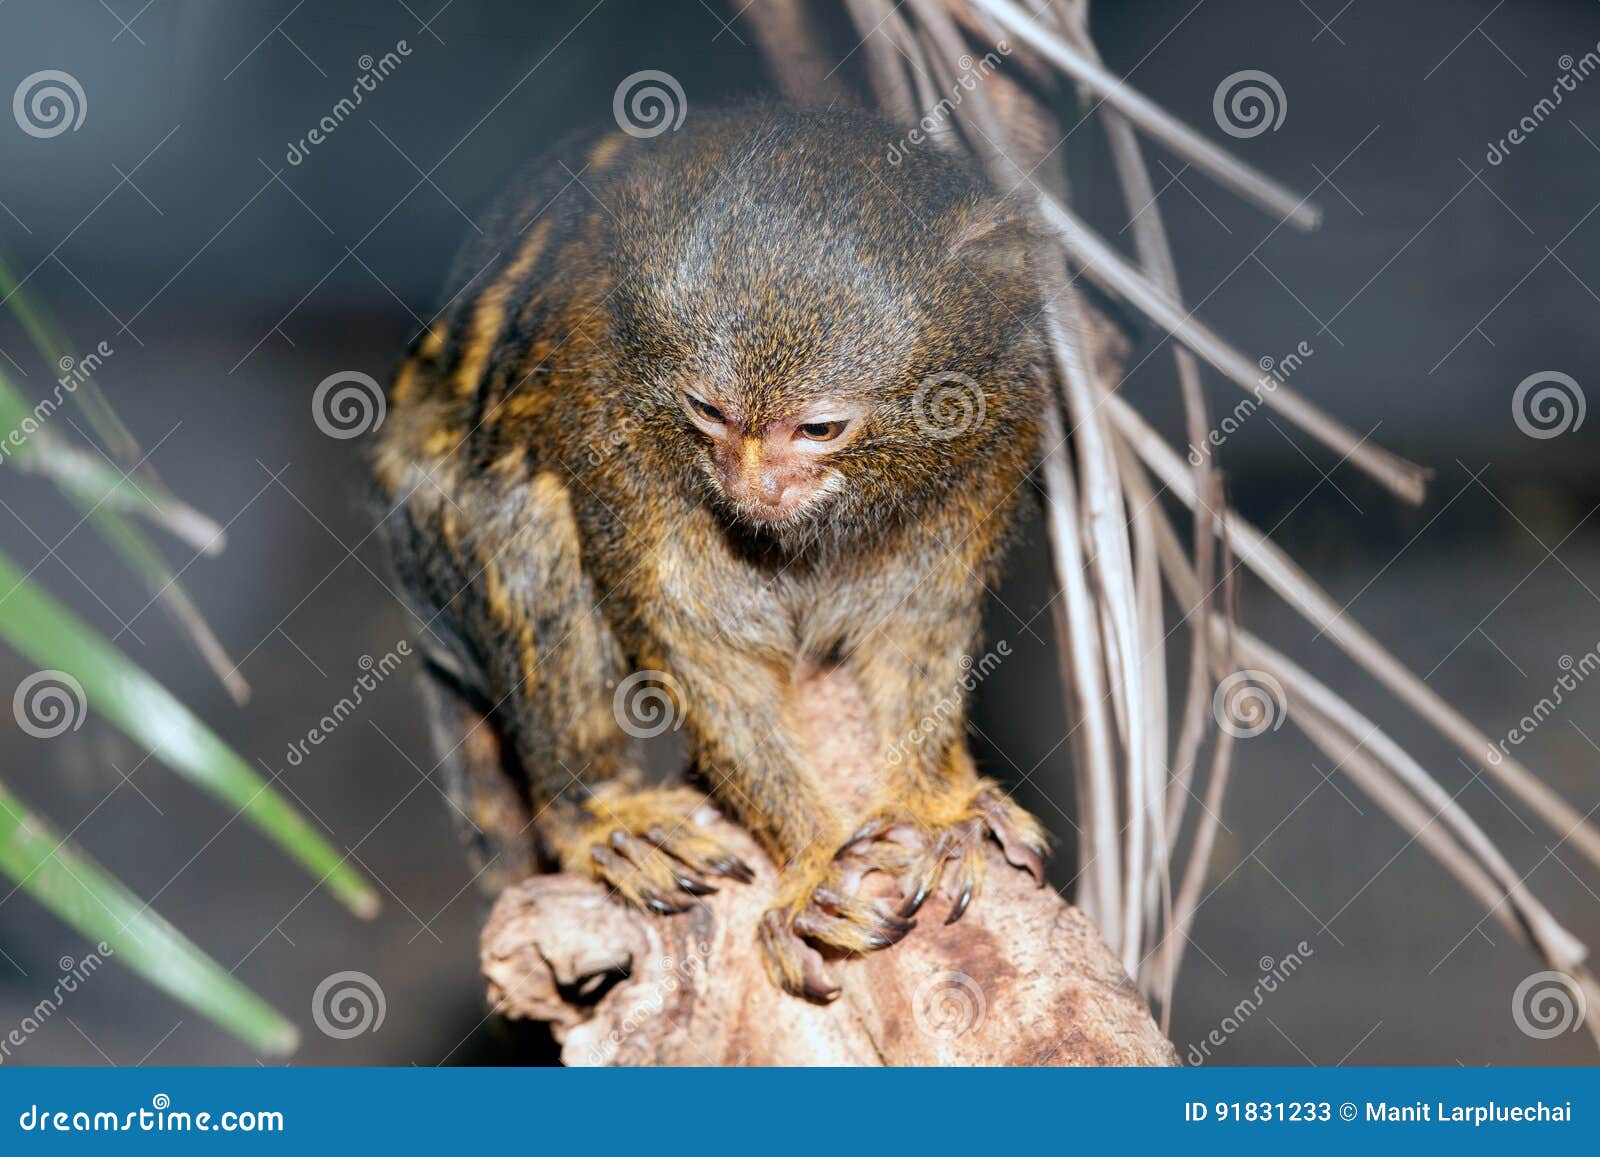 mico sagui black-tufted marmoset callithrix penicillata.